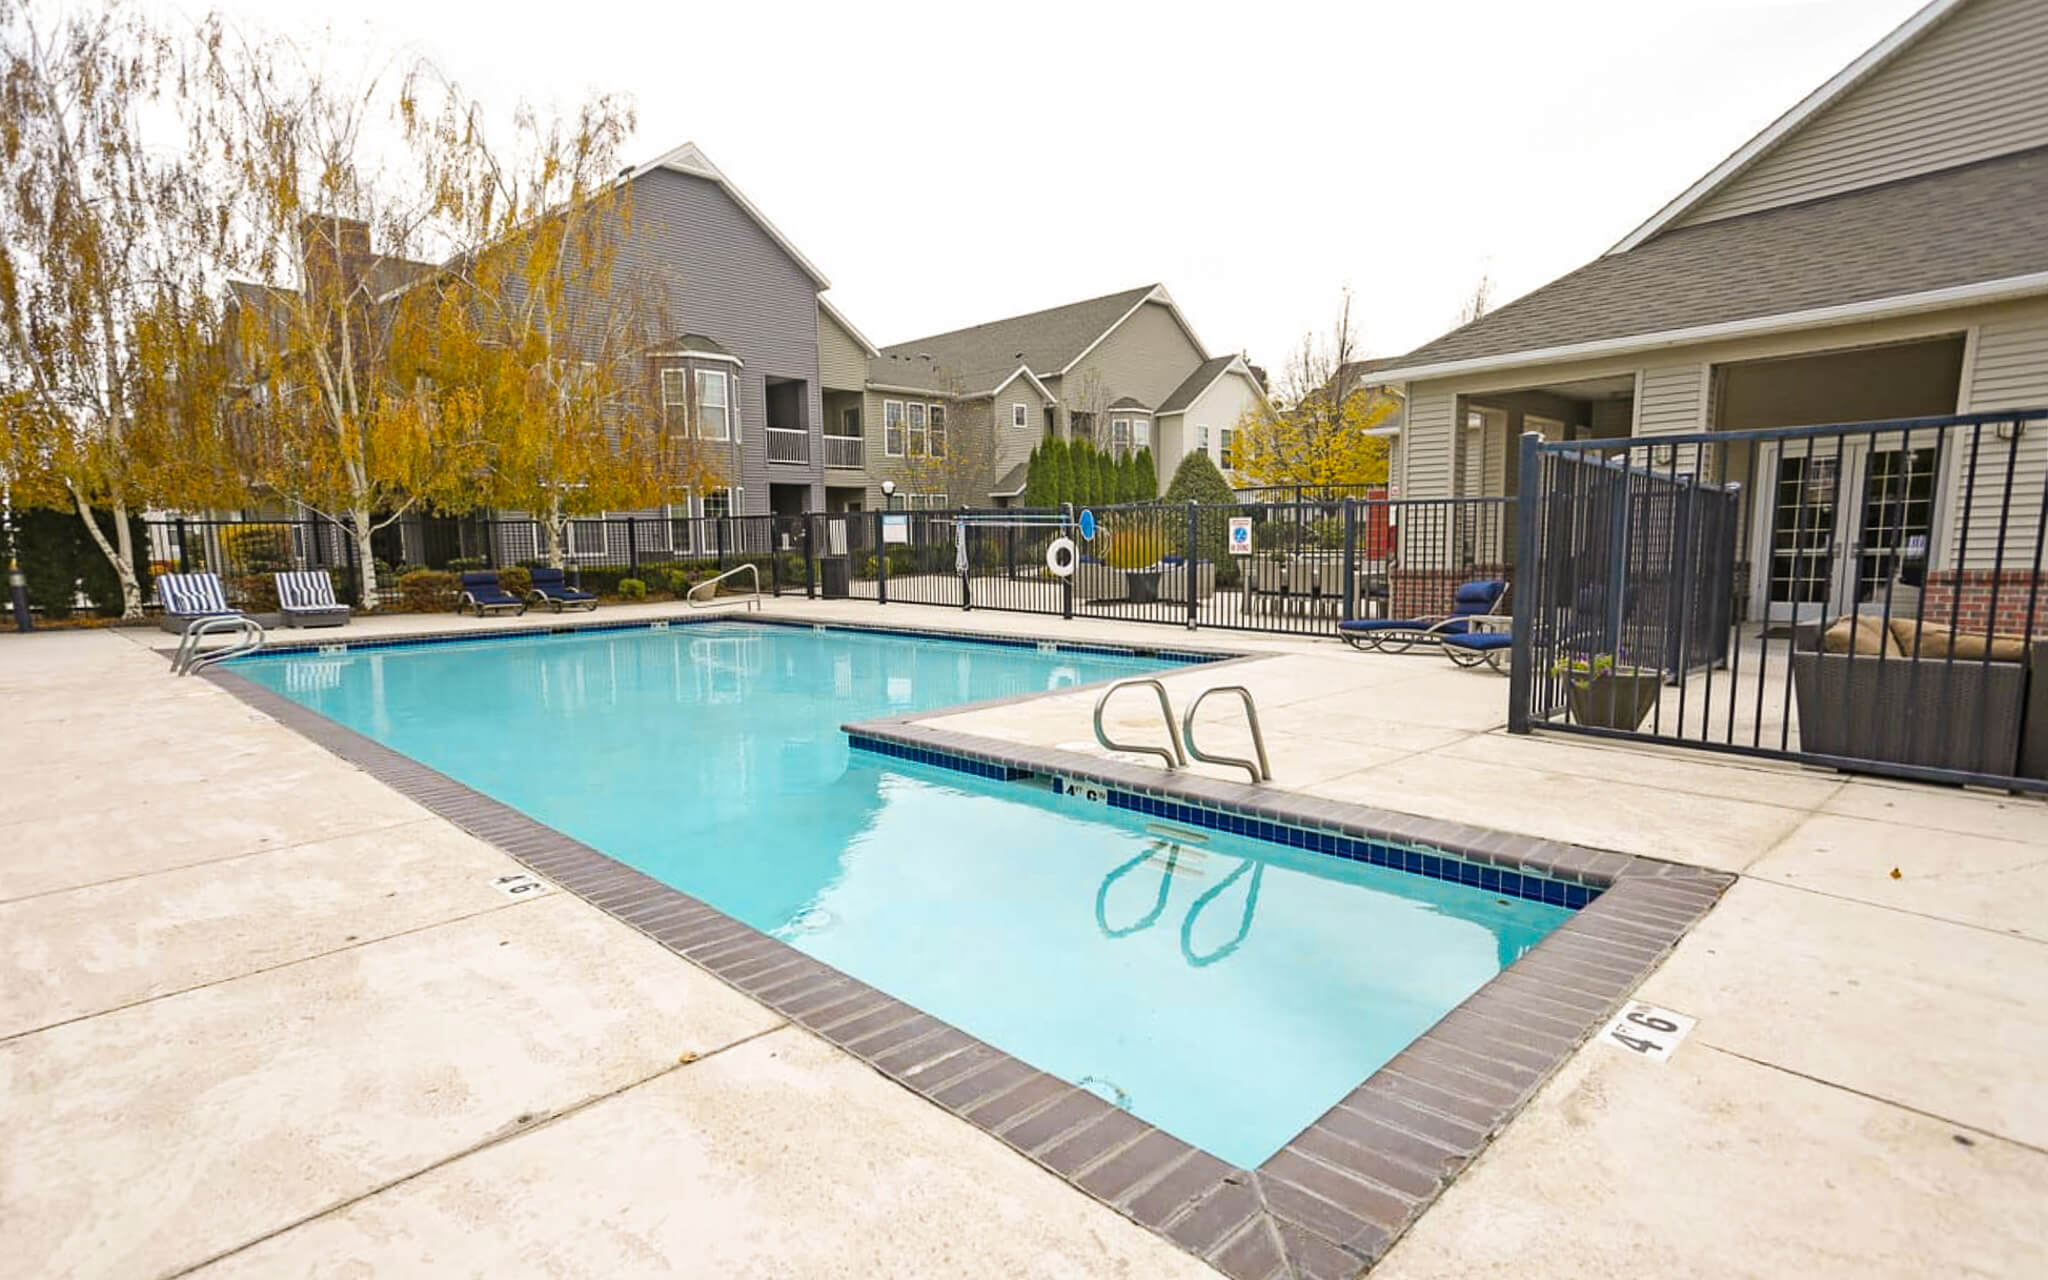 Paragon Corporate Housing - Villas at Meadow Springs Apartments - Richland Washington